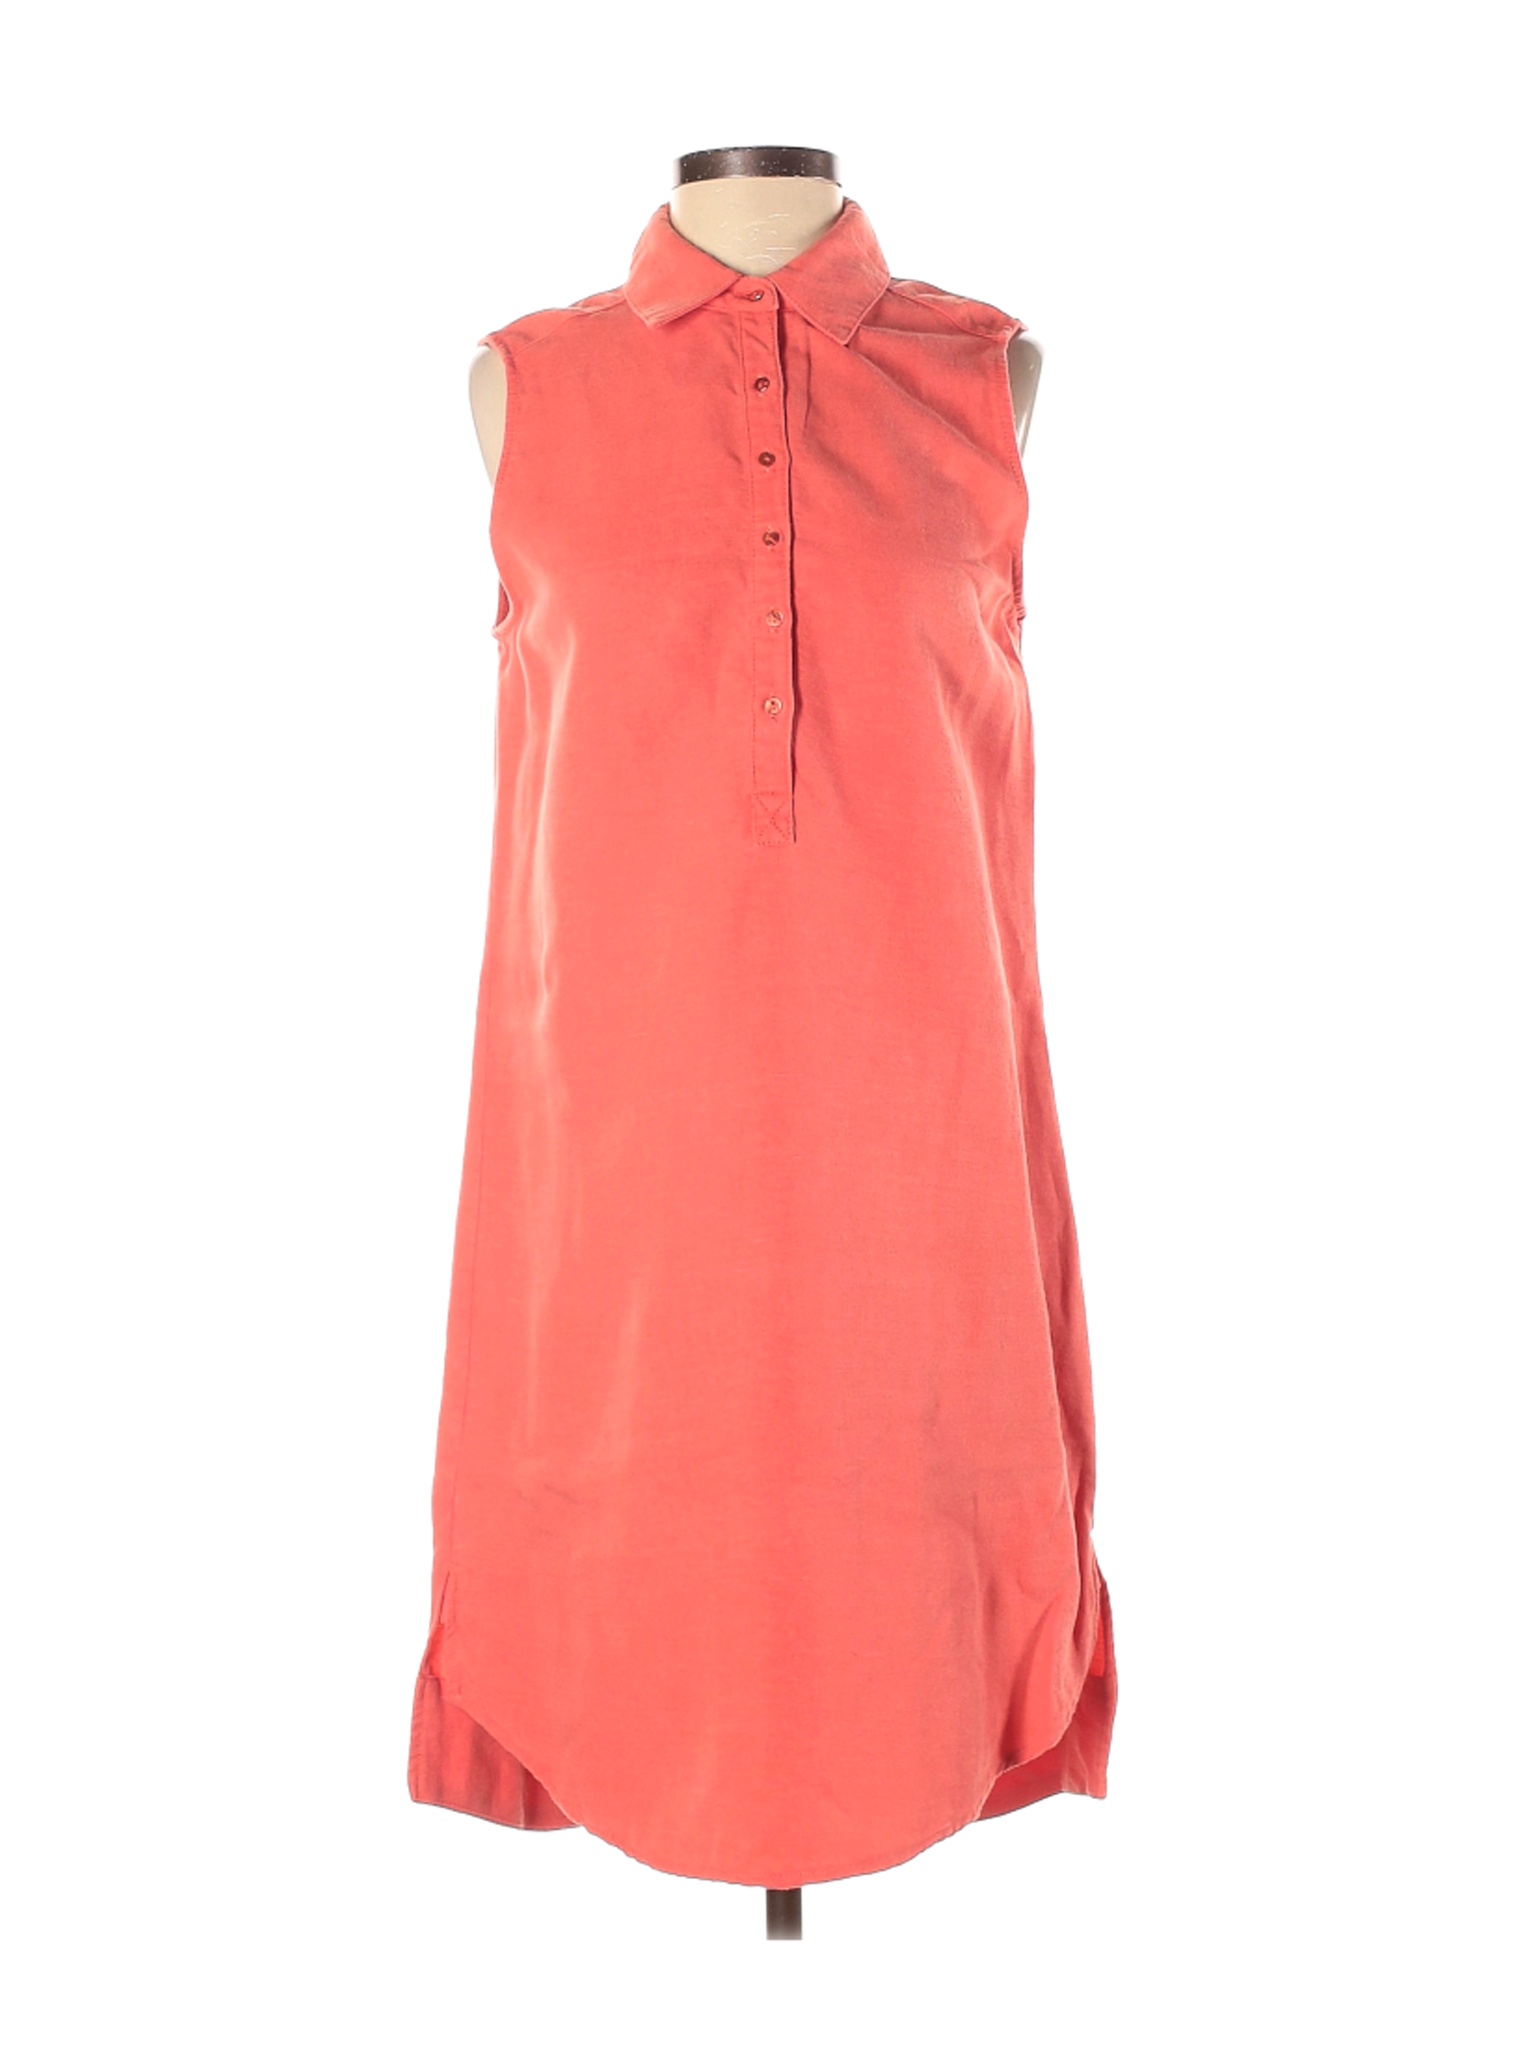 Workshop Republic Clothing Women Red Casual Dress S | eBay